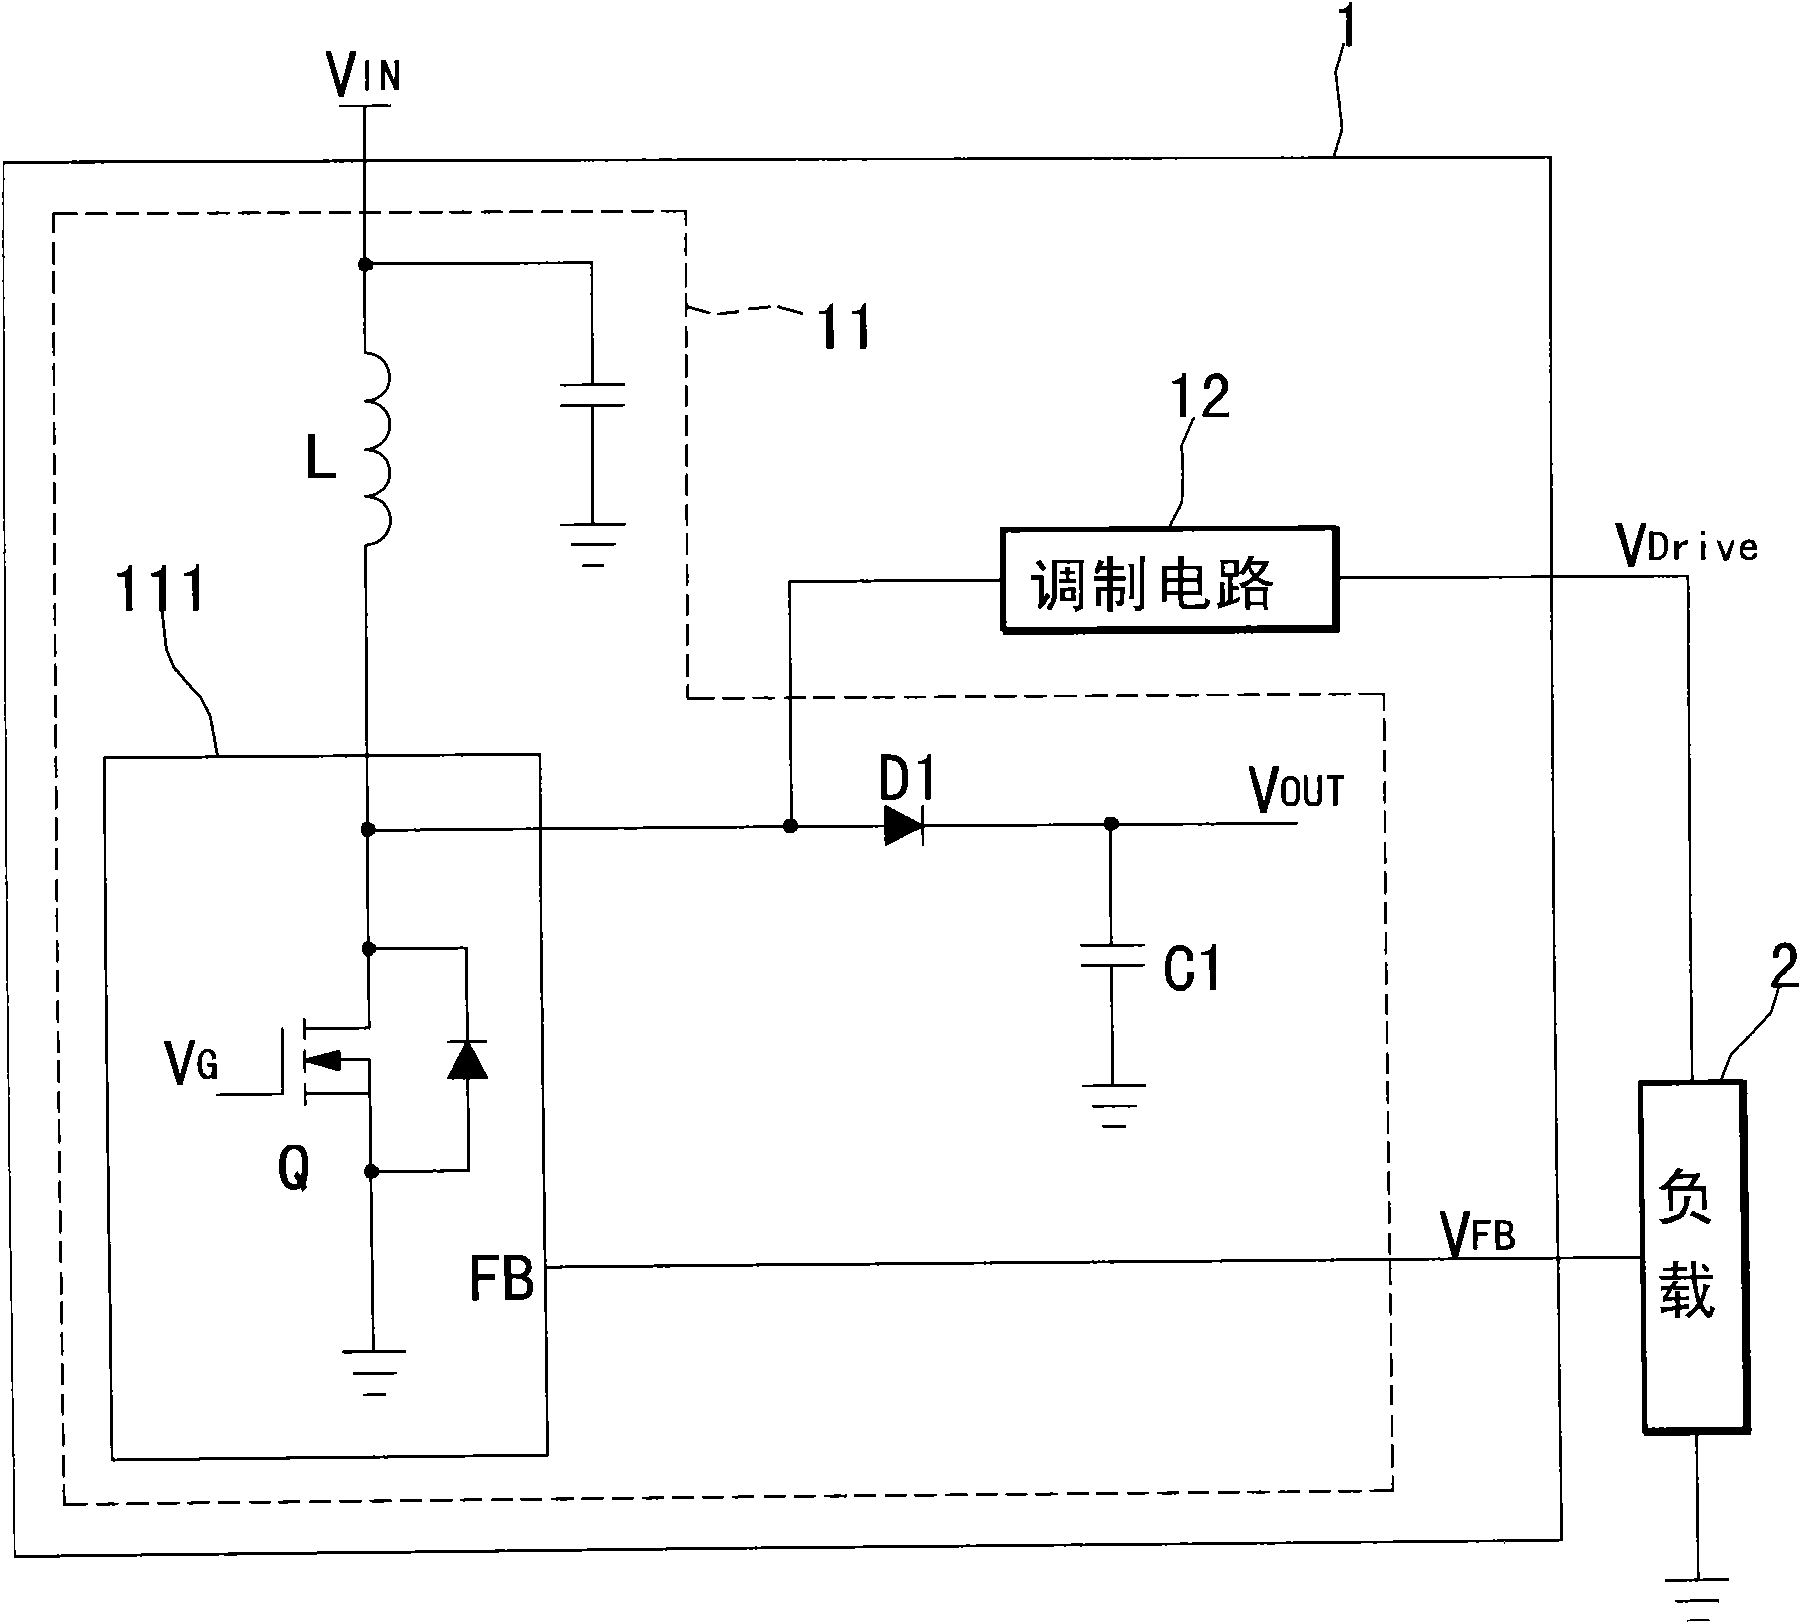 Direct-current voltage conversion device